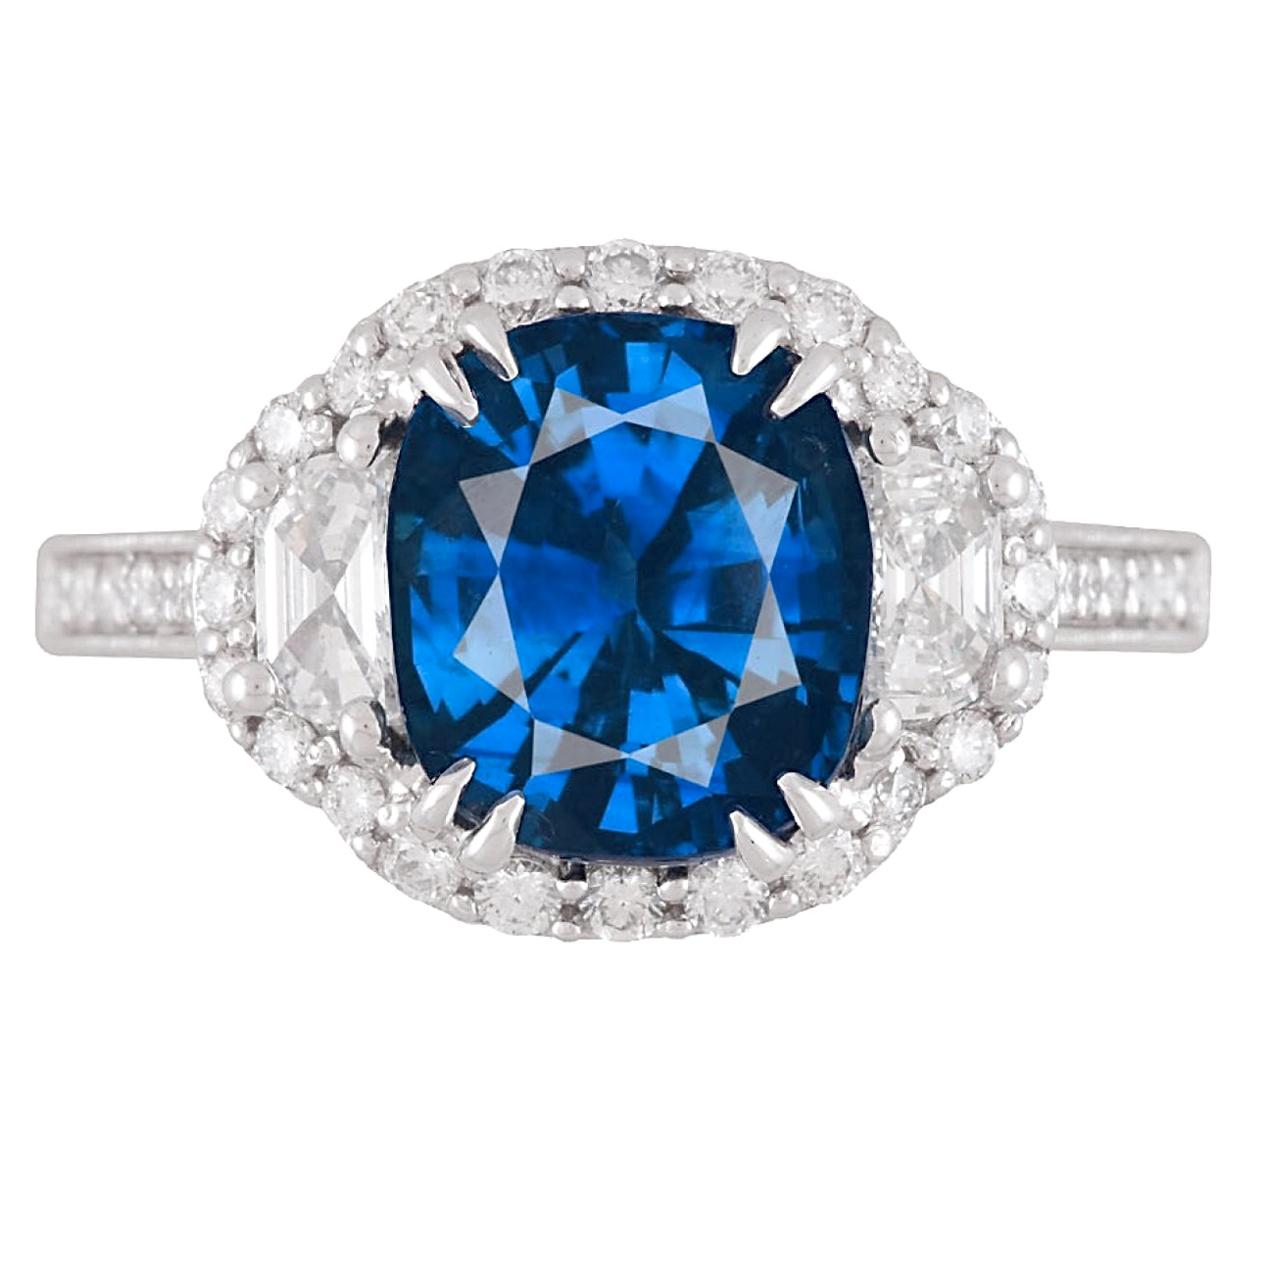 Contemporain GIA Certified 3.28 Ct Vivid Blue Cushion Cut Ceylon Sapphire Ring in 18k ref544 en vente